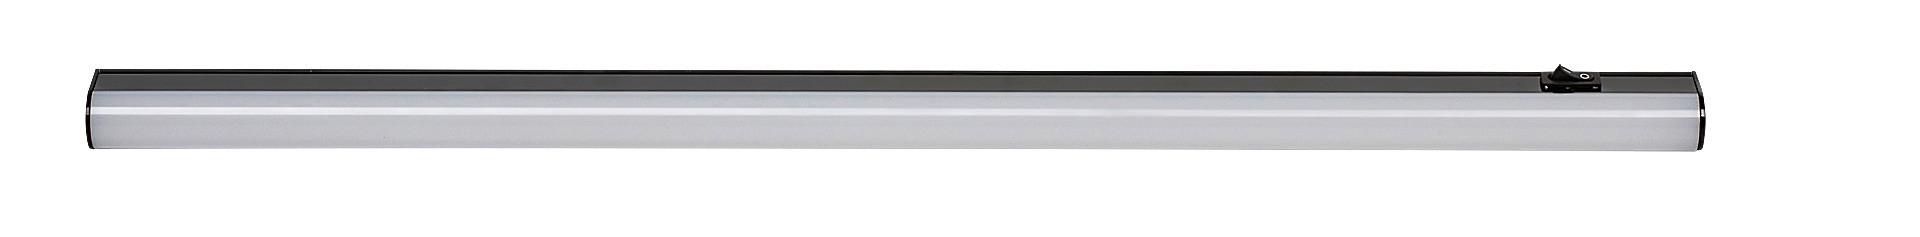 Pultmegvilágító Lámpa Greg 88,5cm - Basics, Műanyag (88.5/2/3cm) - Rabalux